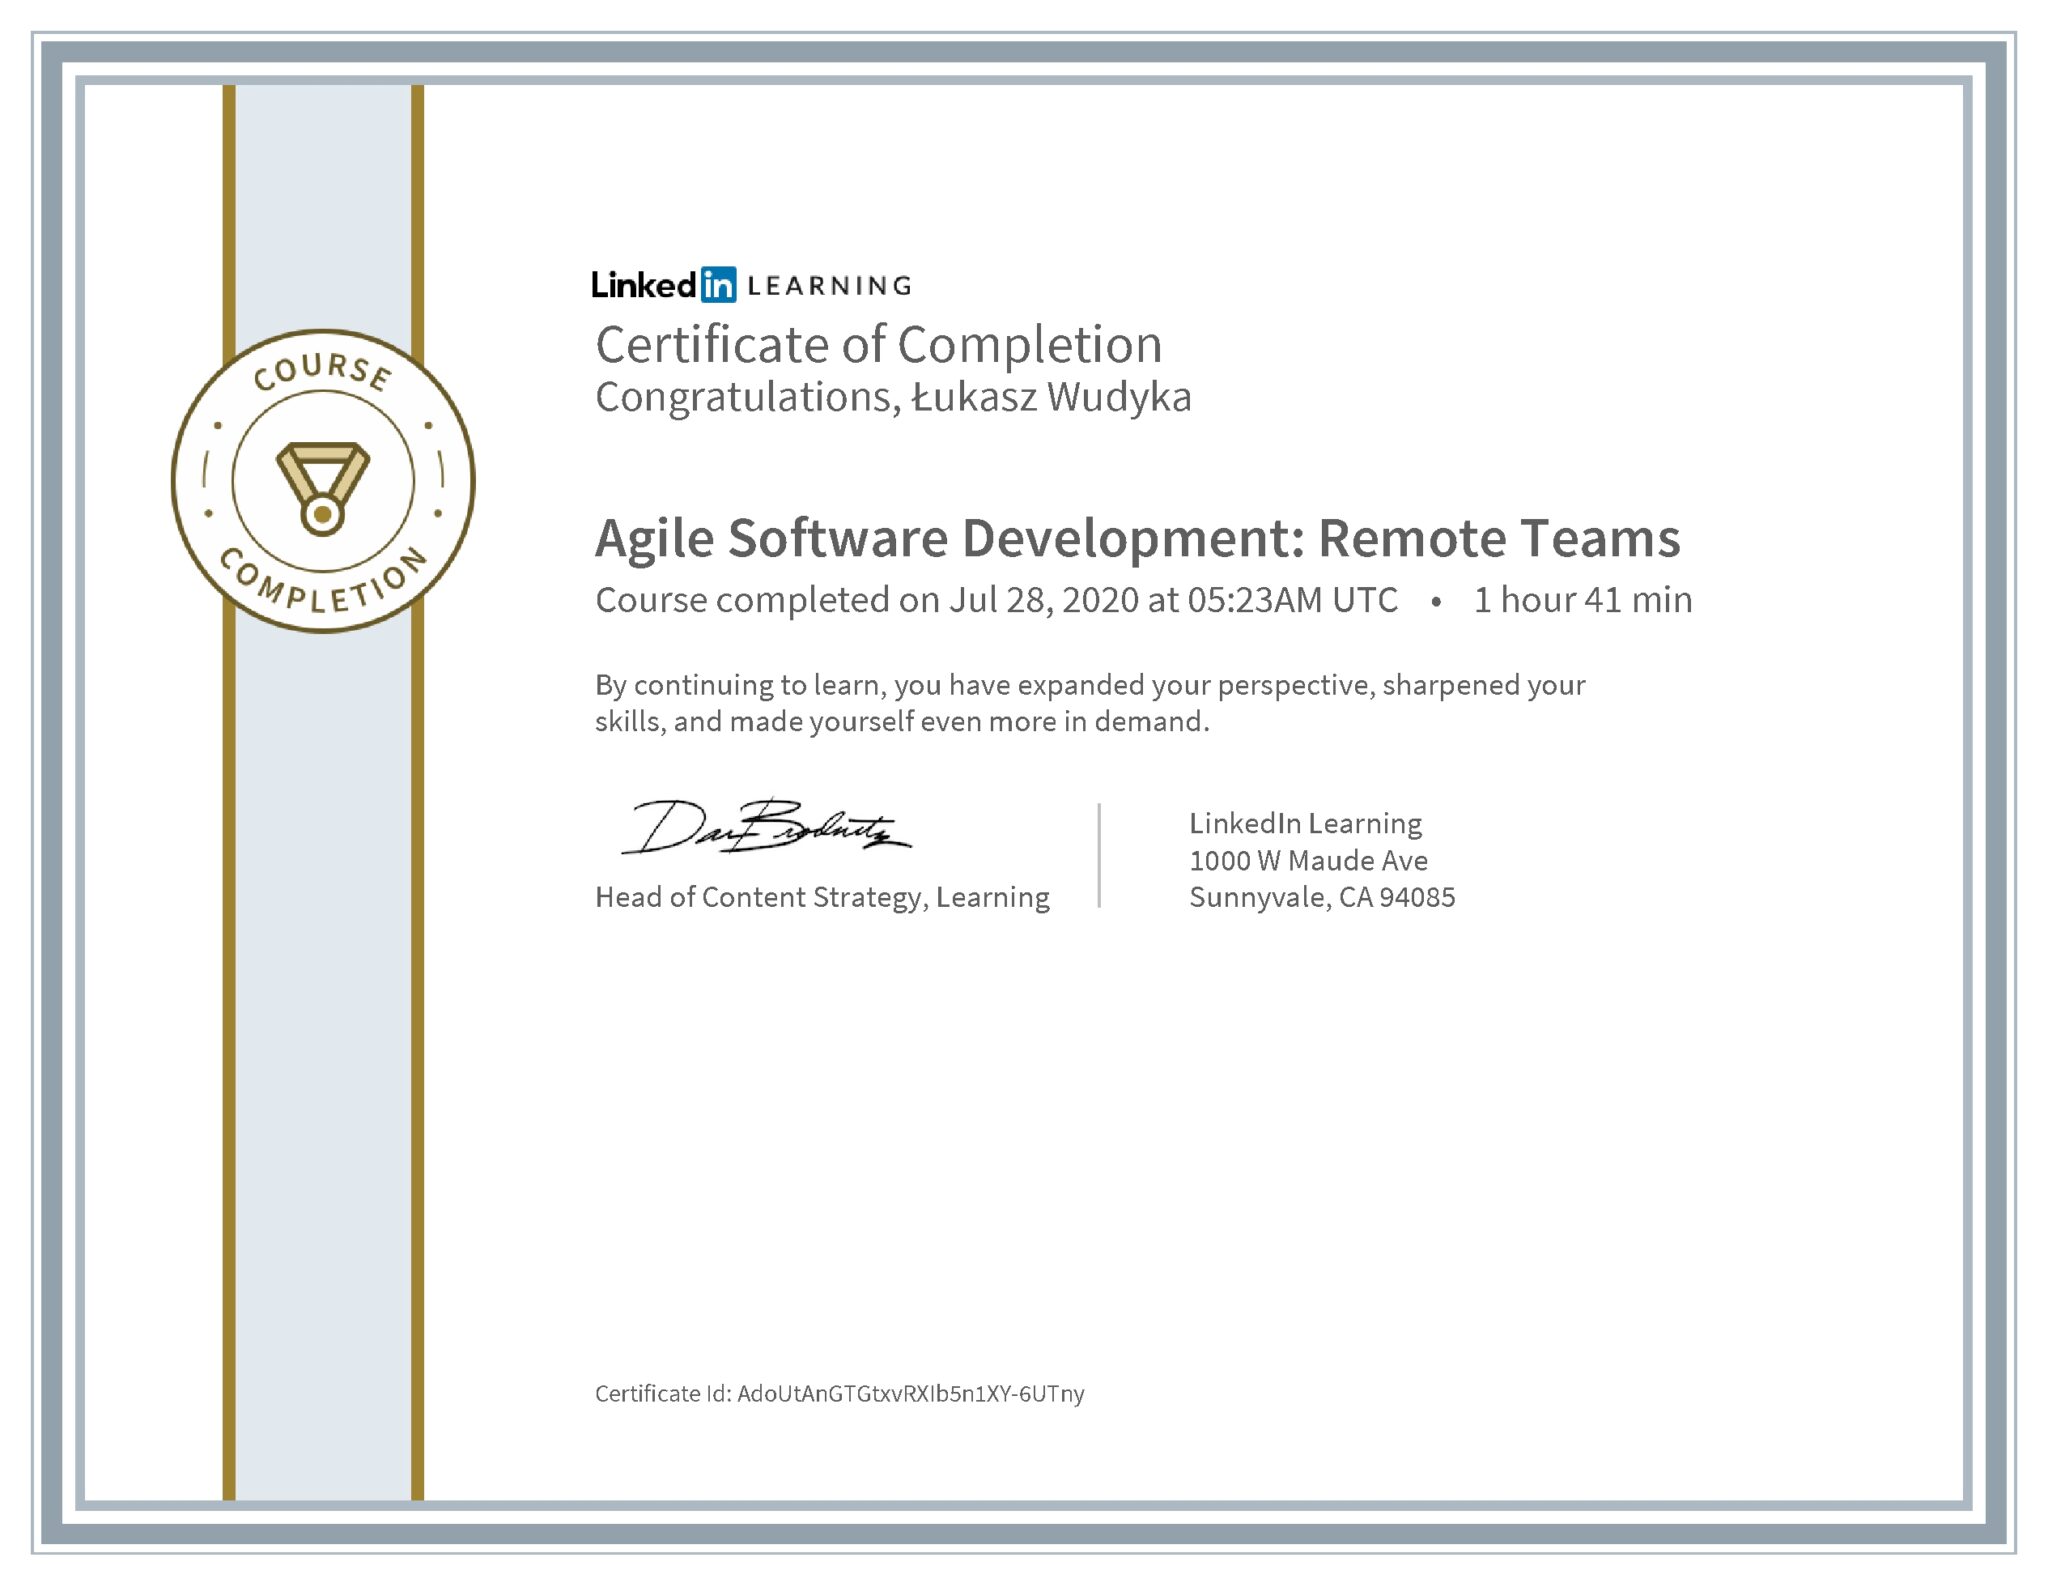 Łukasz Wudyka certyfikat LinkedIn Agile Software Development: Remote Teams